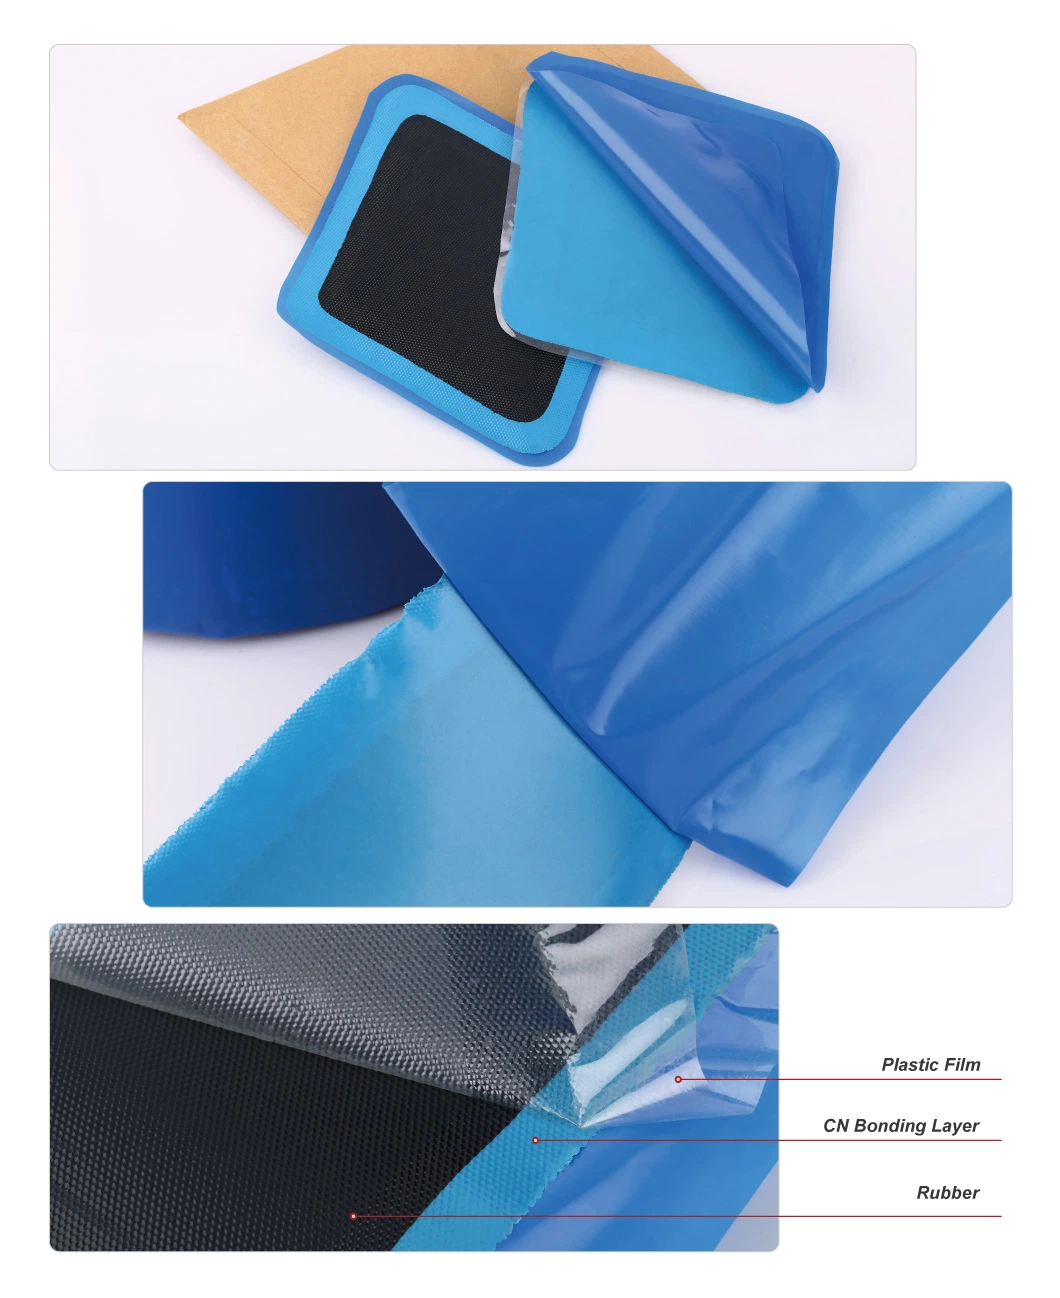 Wear Resistant Conveyor Belt Cn Layer Repair Strip for Rubber Belt Damage Repair